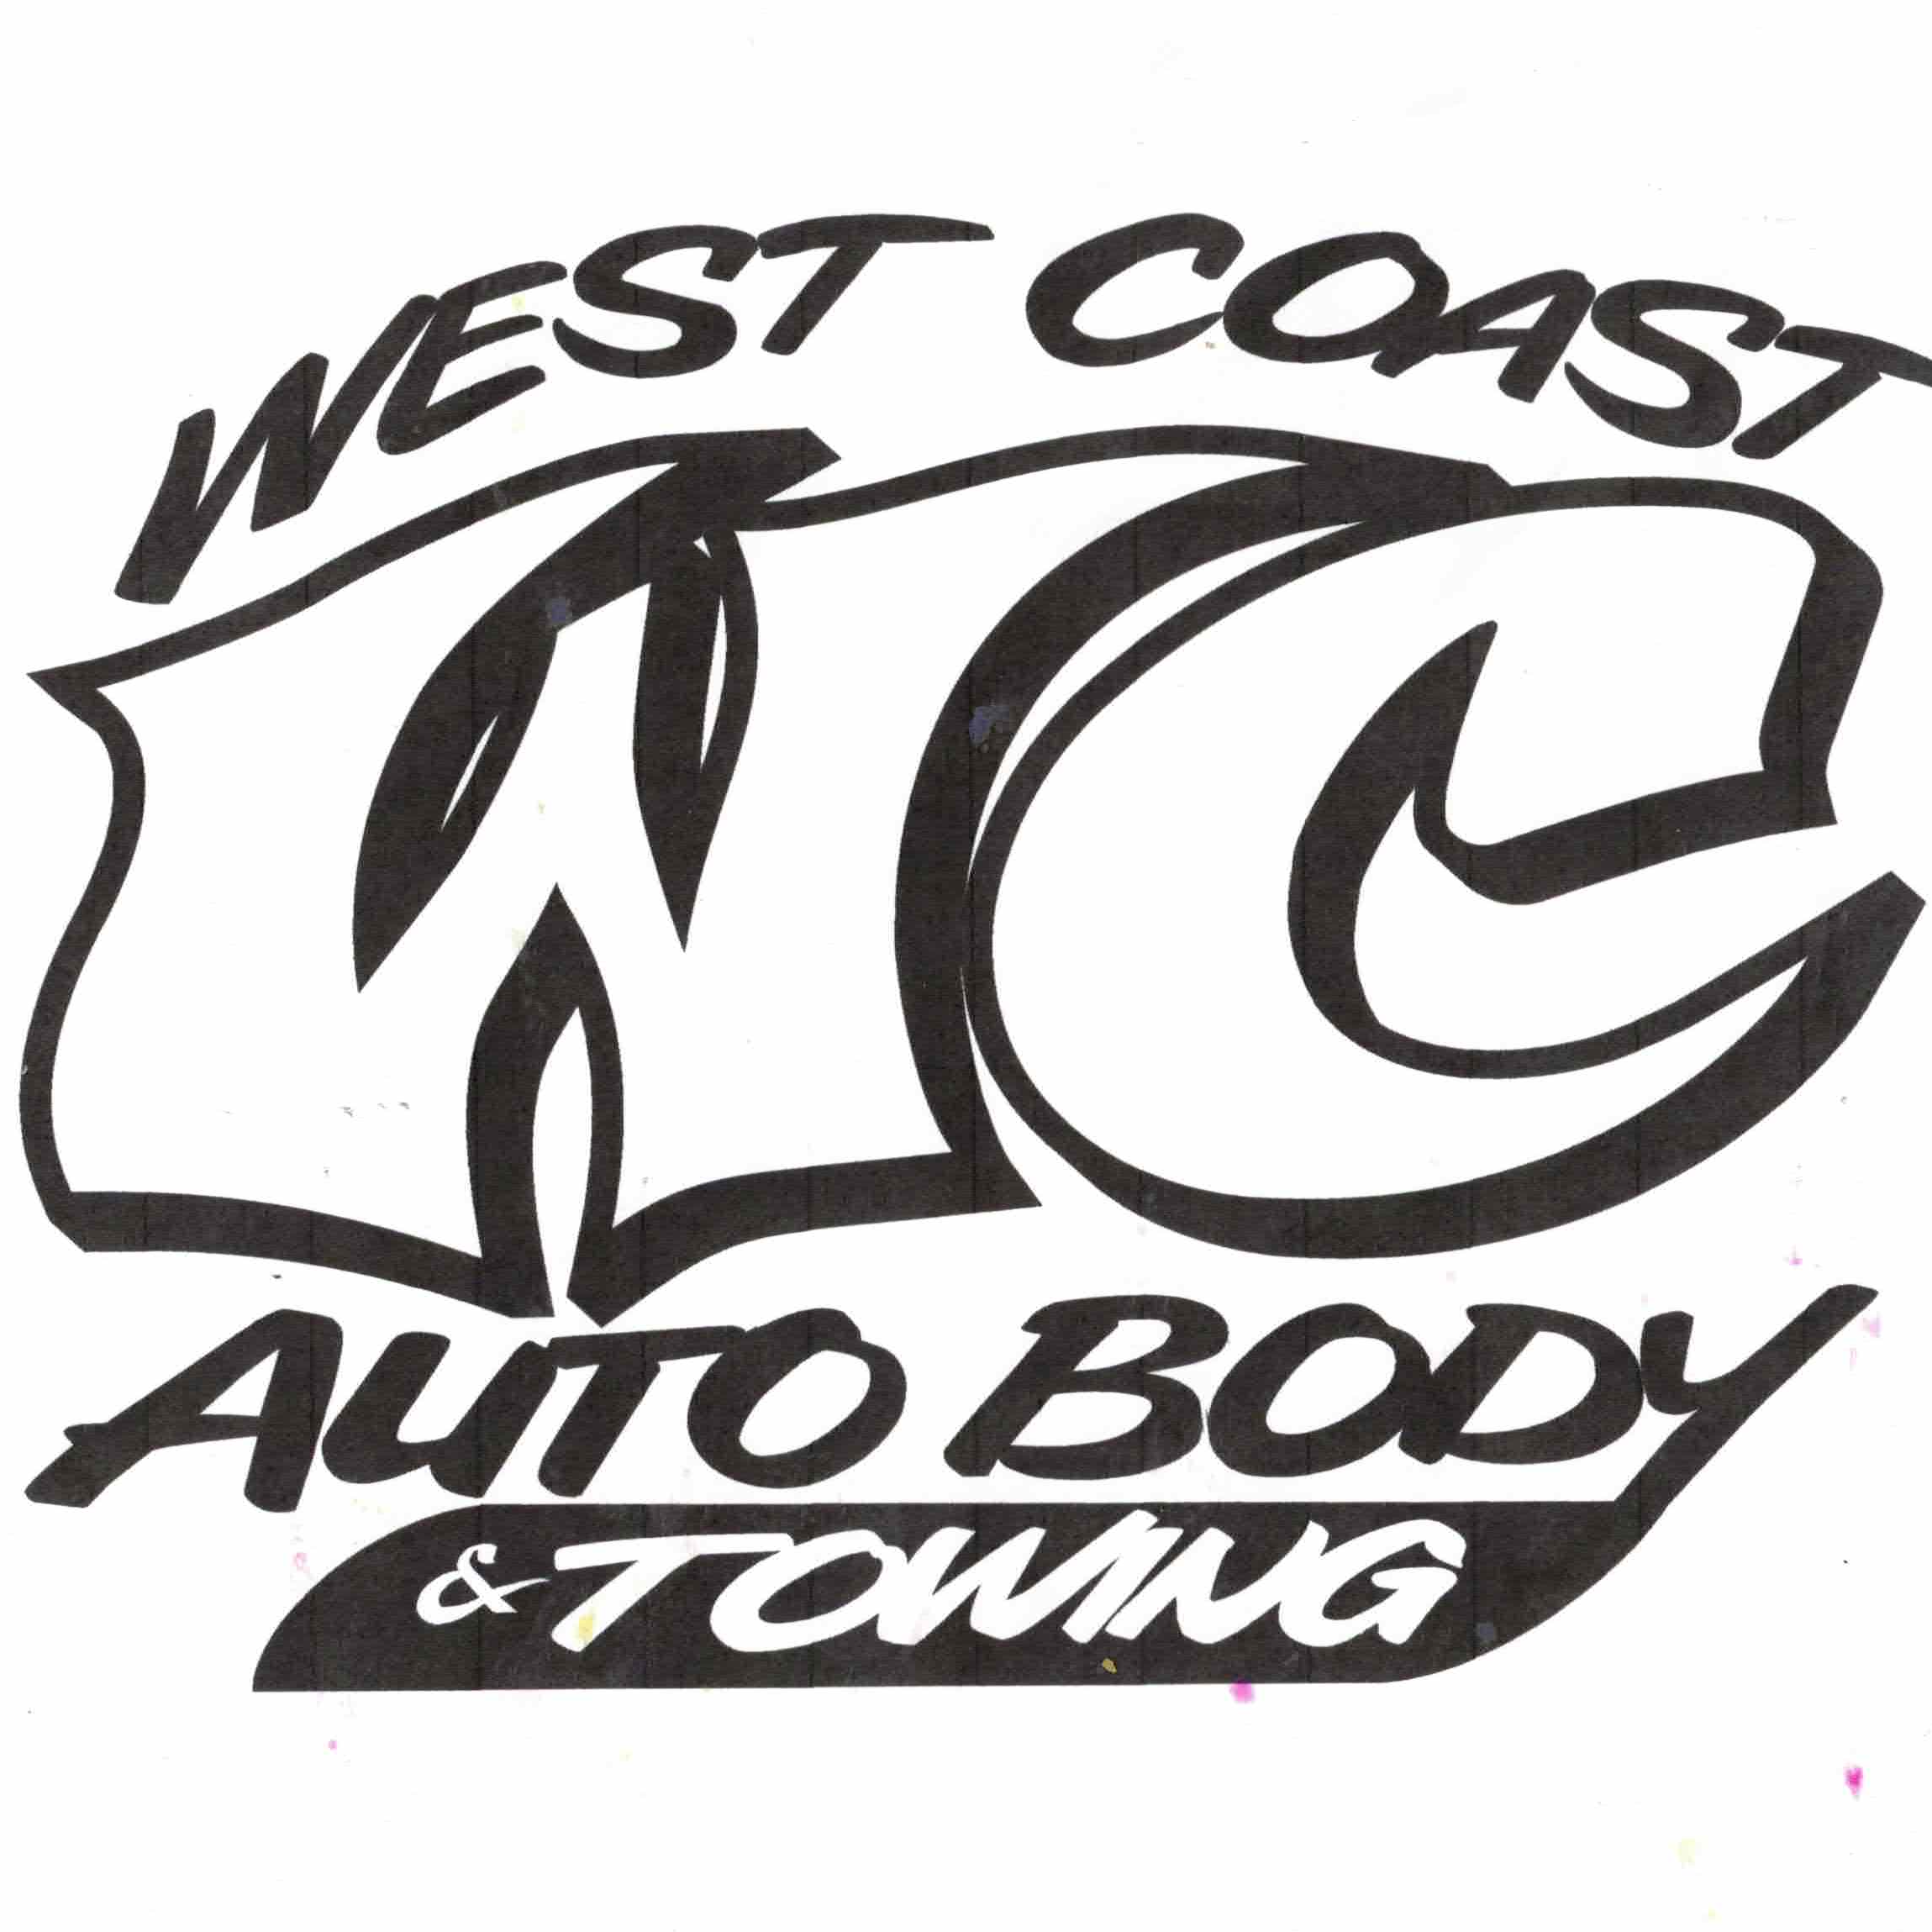 WEST COAST AUTO BODY TOWING logo